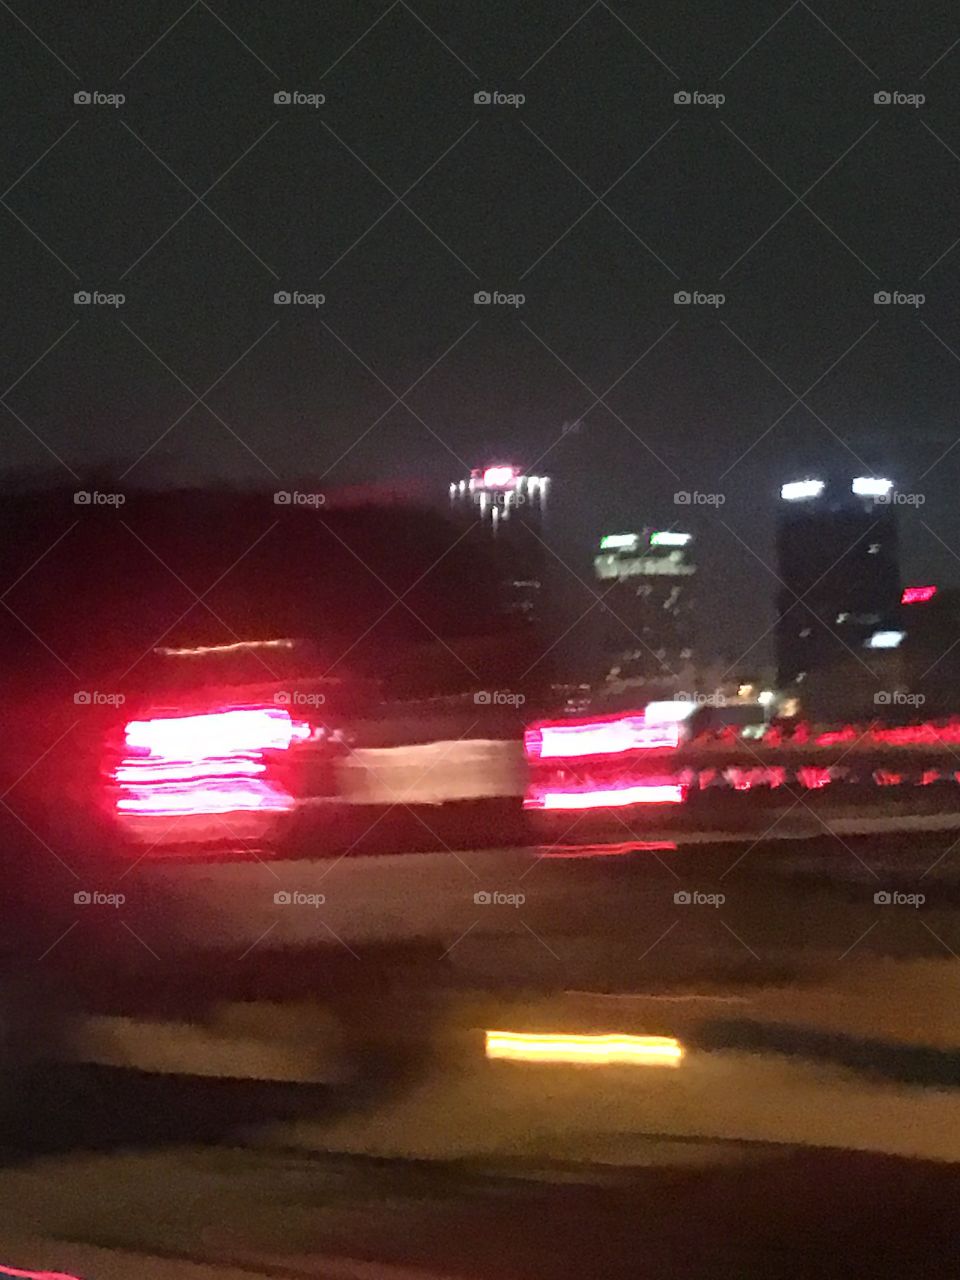 City lights at night
